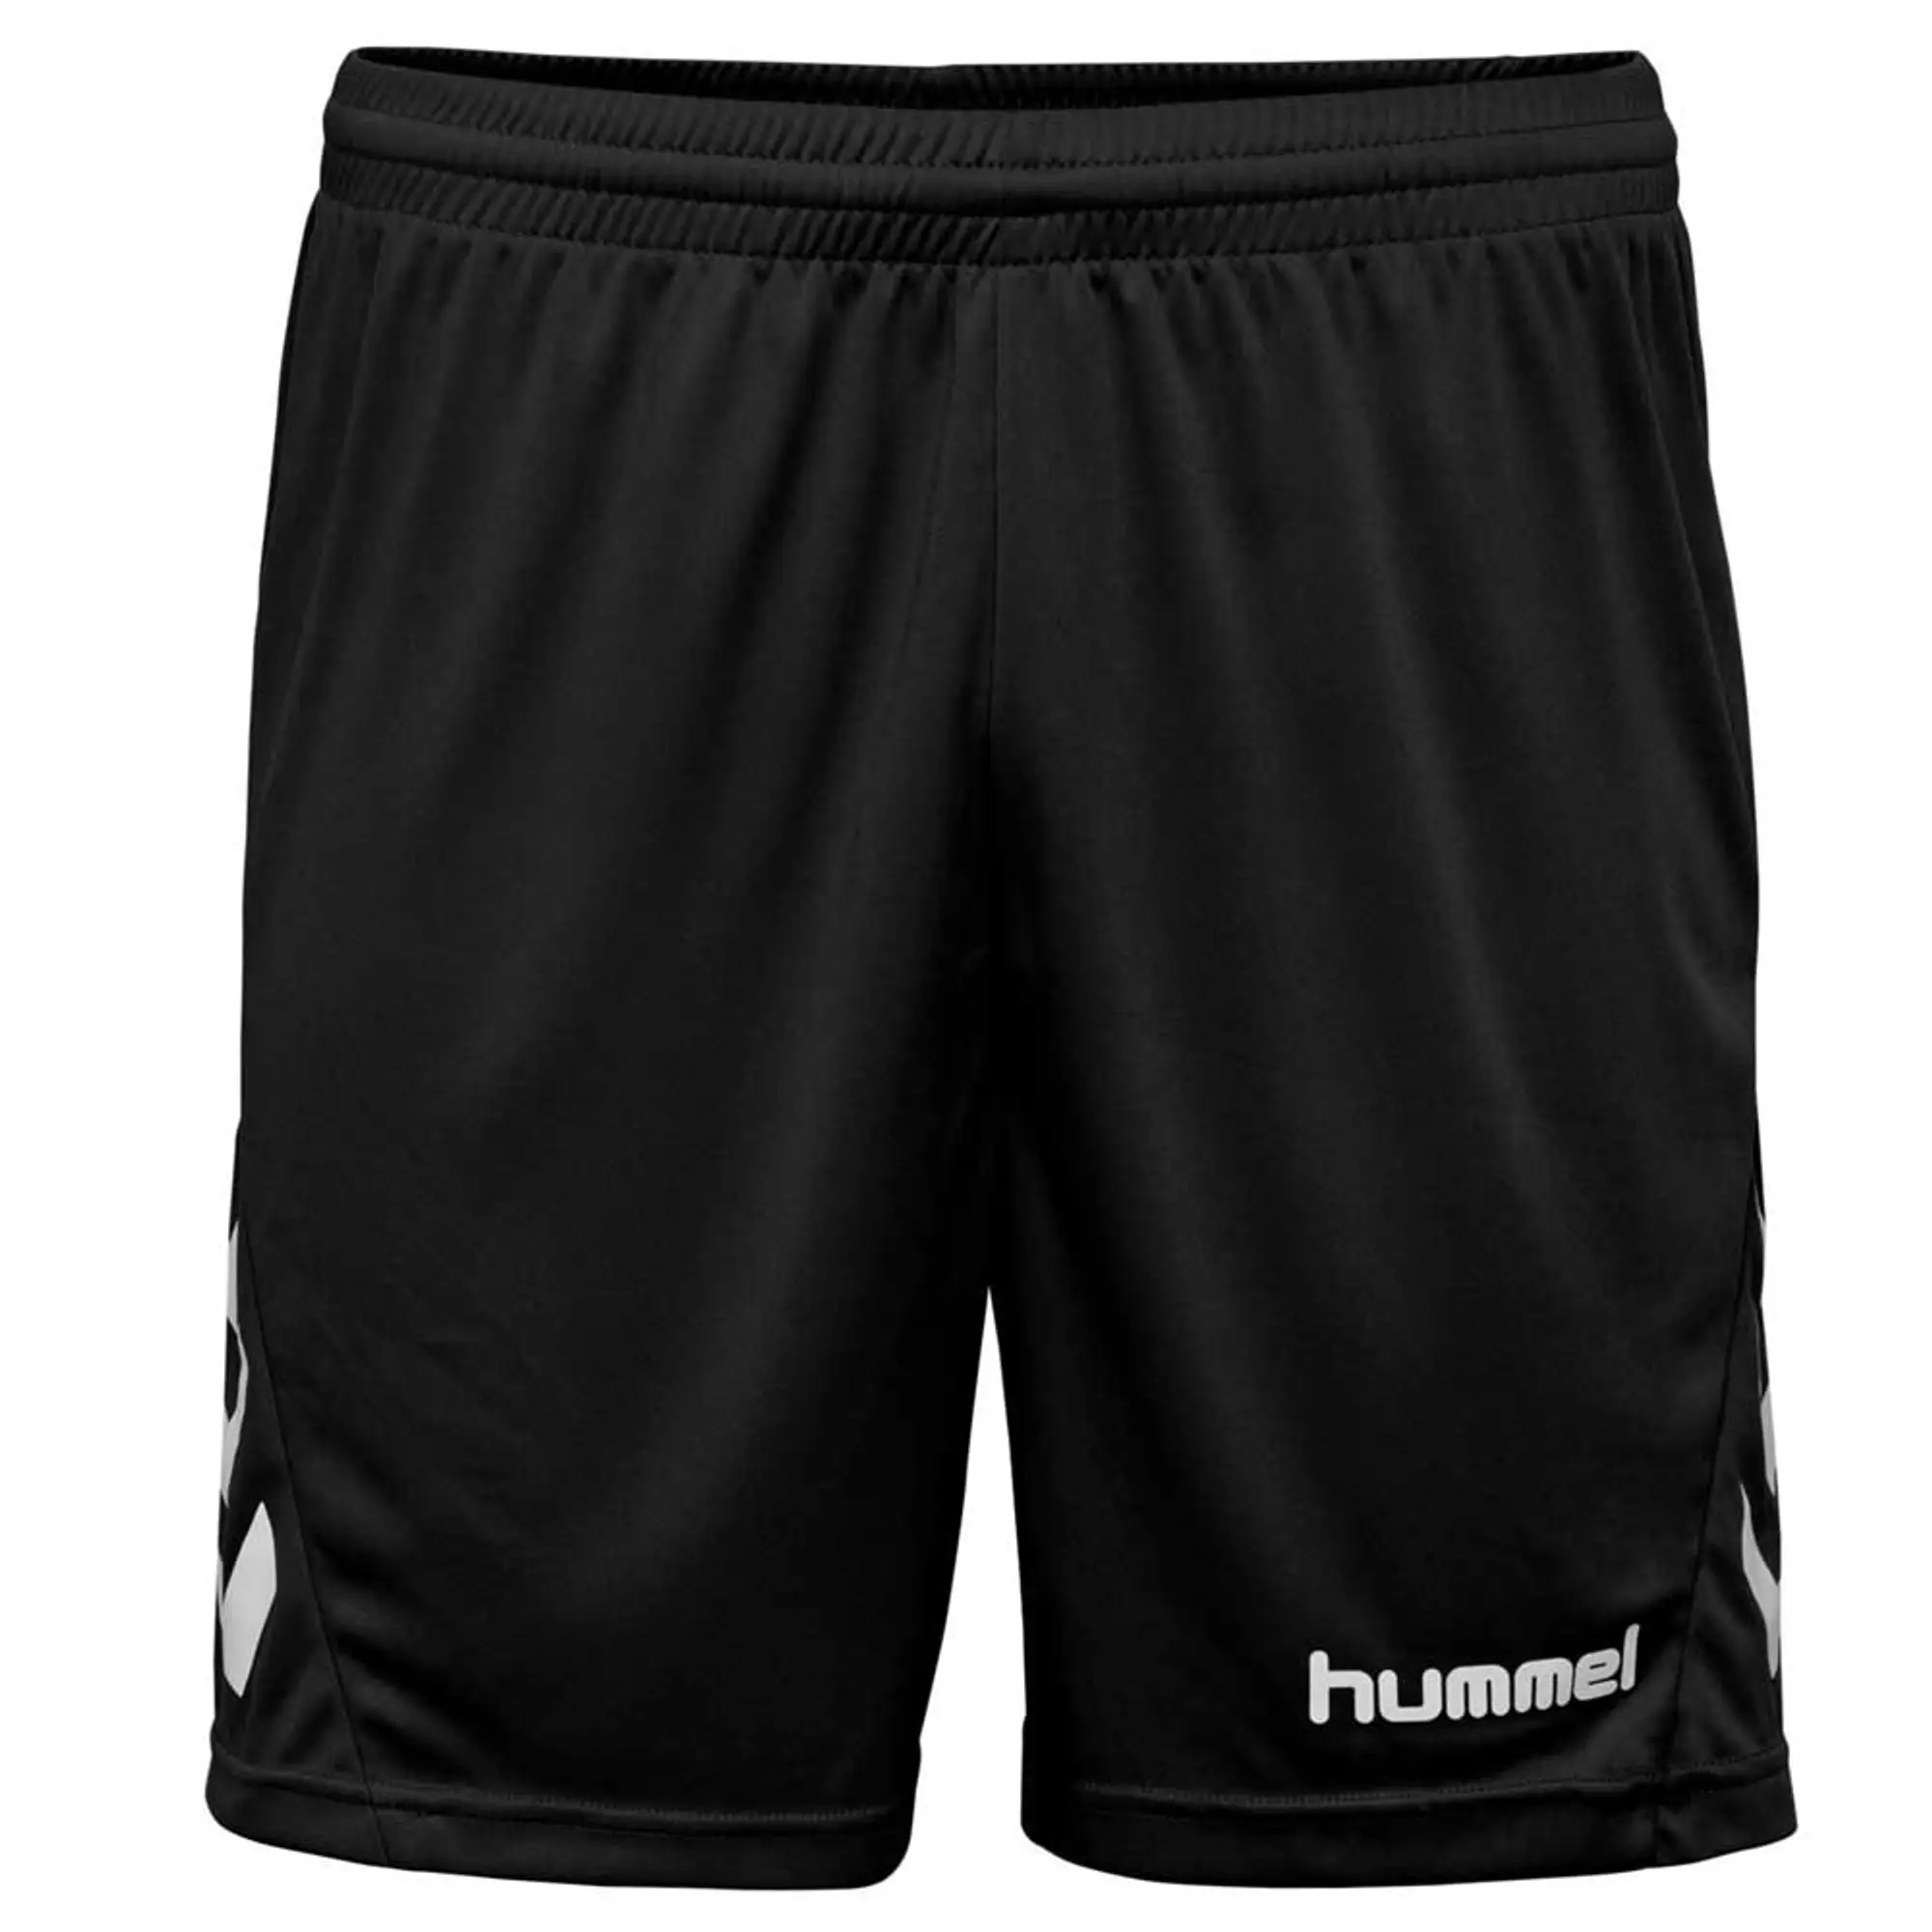 Hummel Promo Football Set - Black